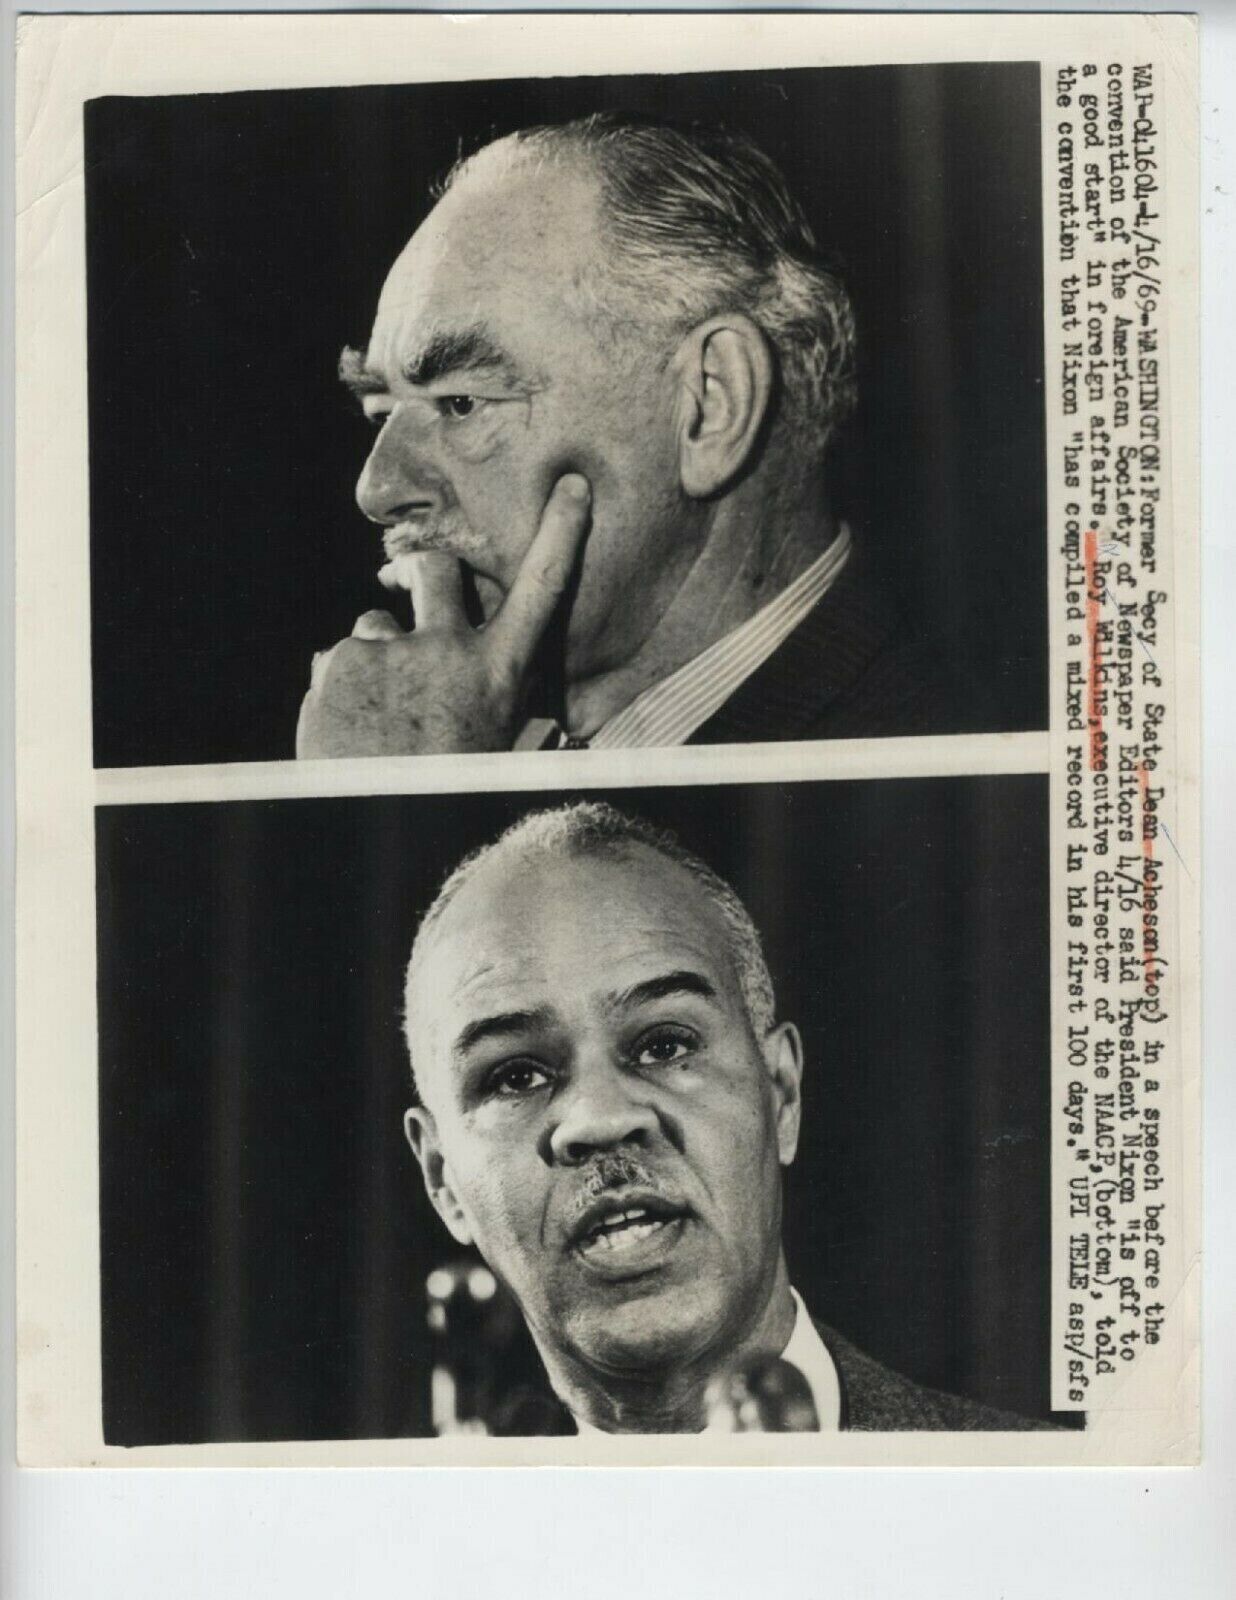 1969 ROY WILKINS VINTAGE PHOTO WASHINGTON NAACP CIVIL RIGHTS 